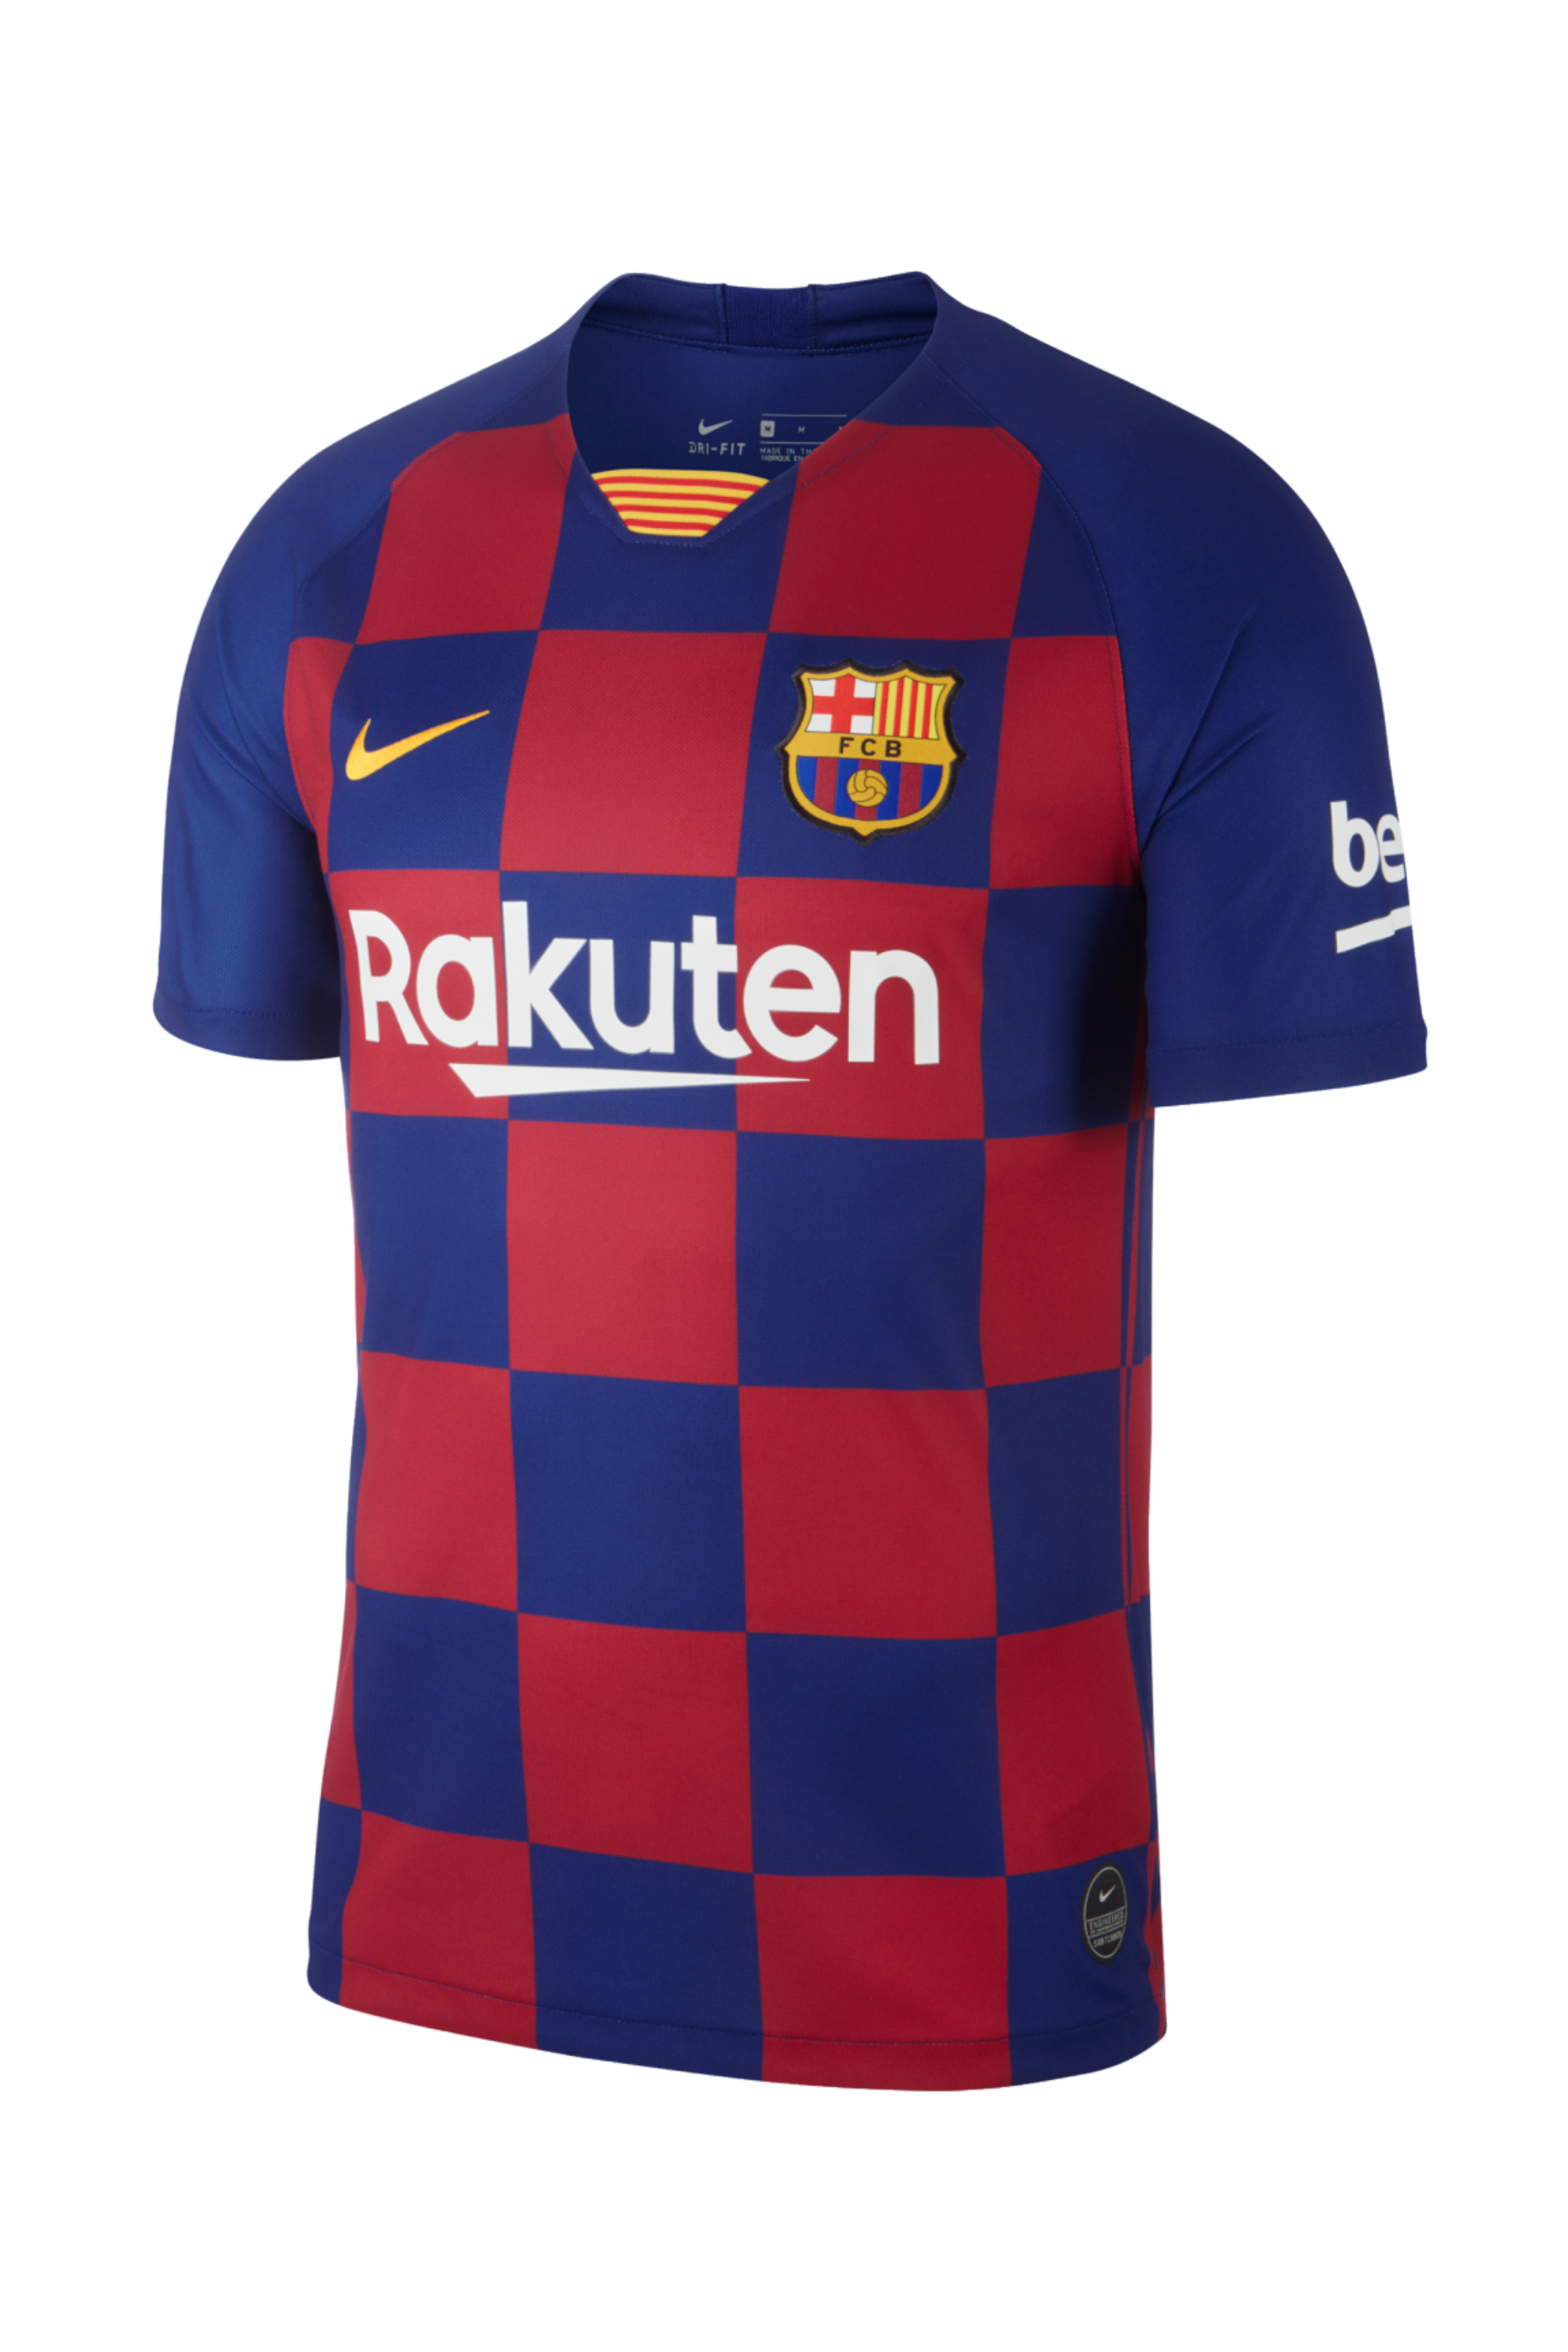 barcelona stadium kit